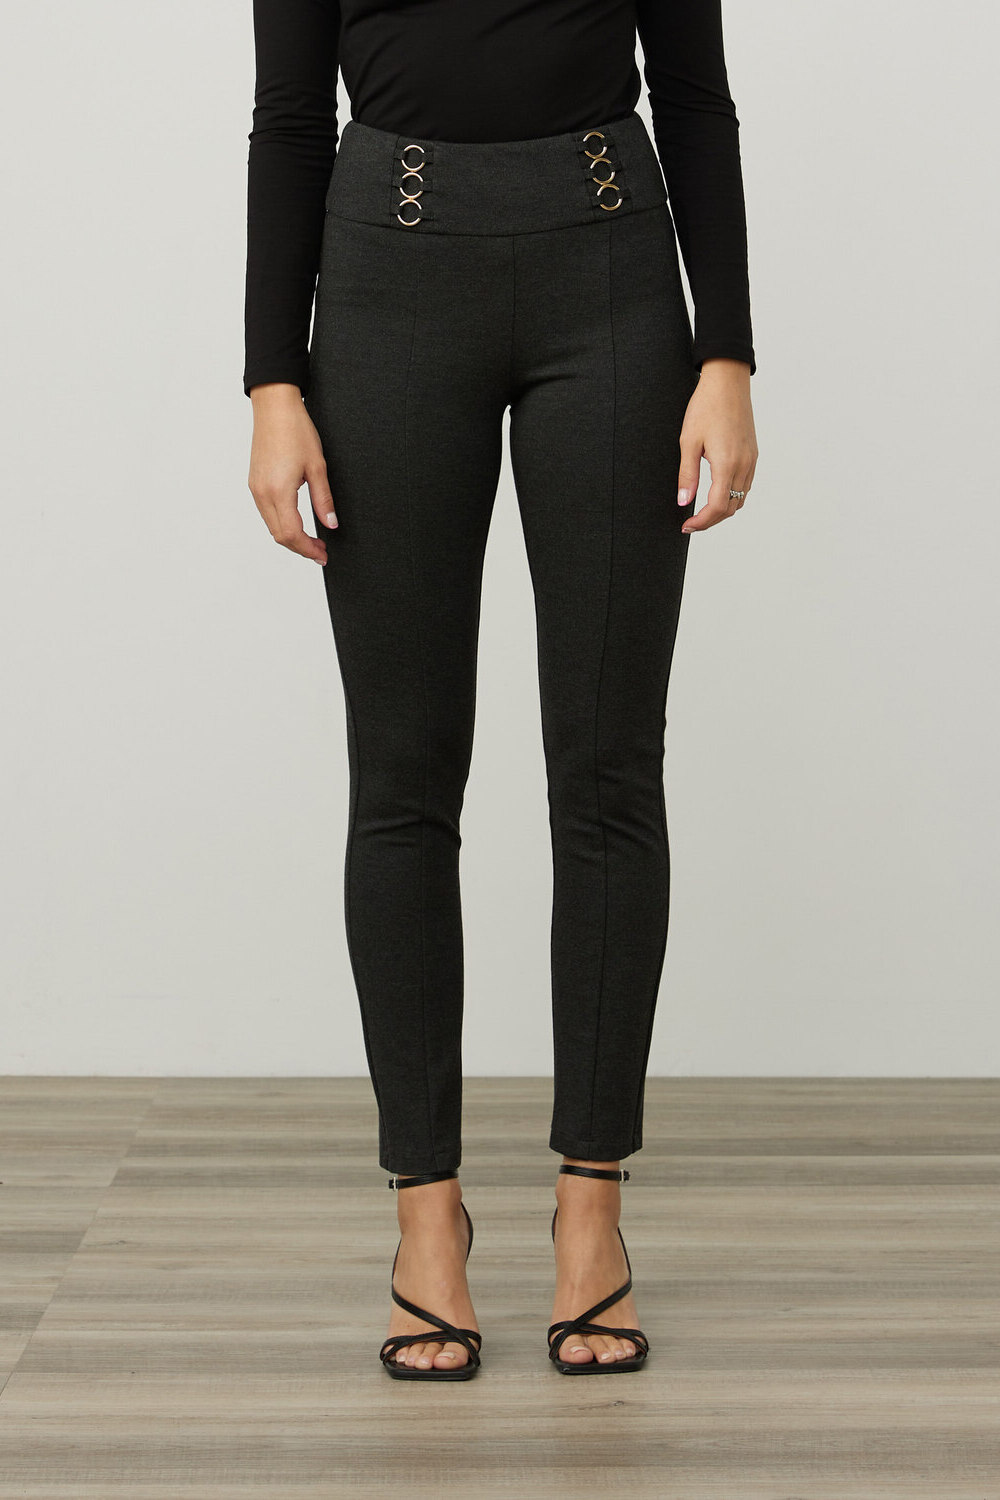 Joseph Ribkoff Slim Fit Pants Style 213651. Charcoal Grey